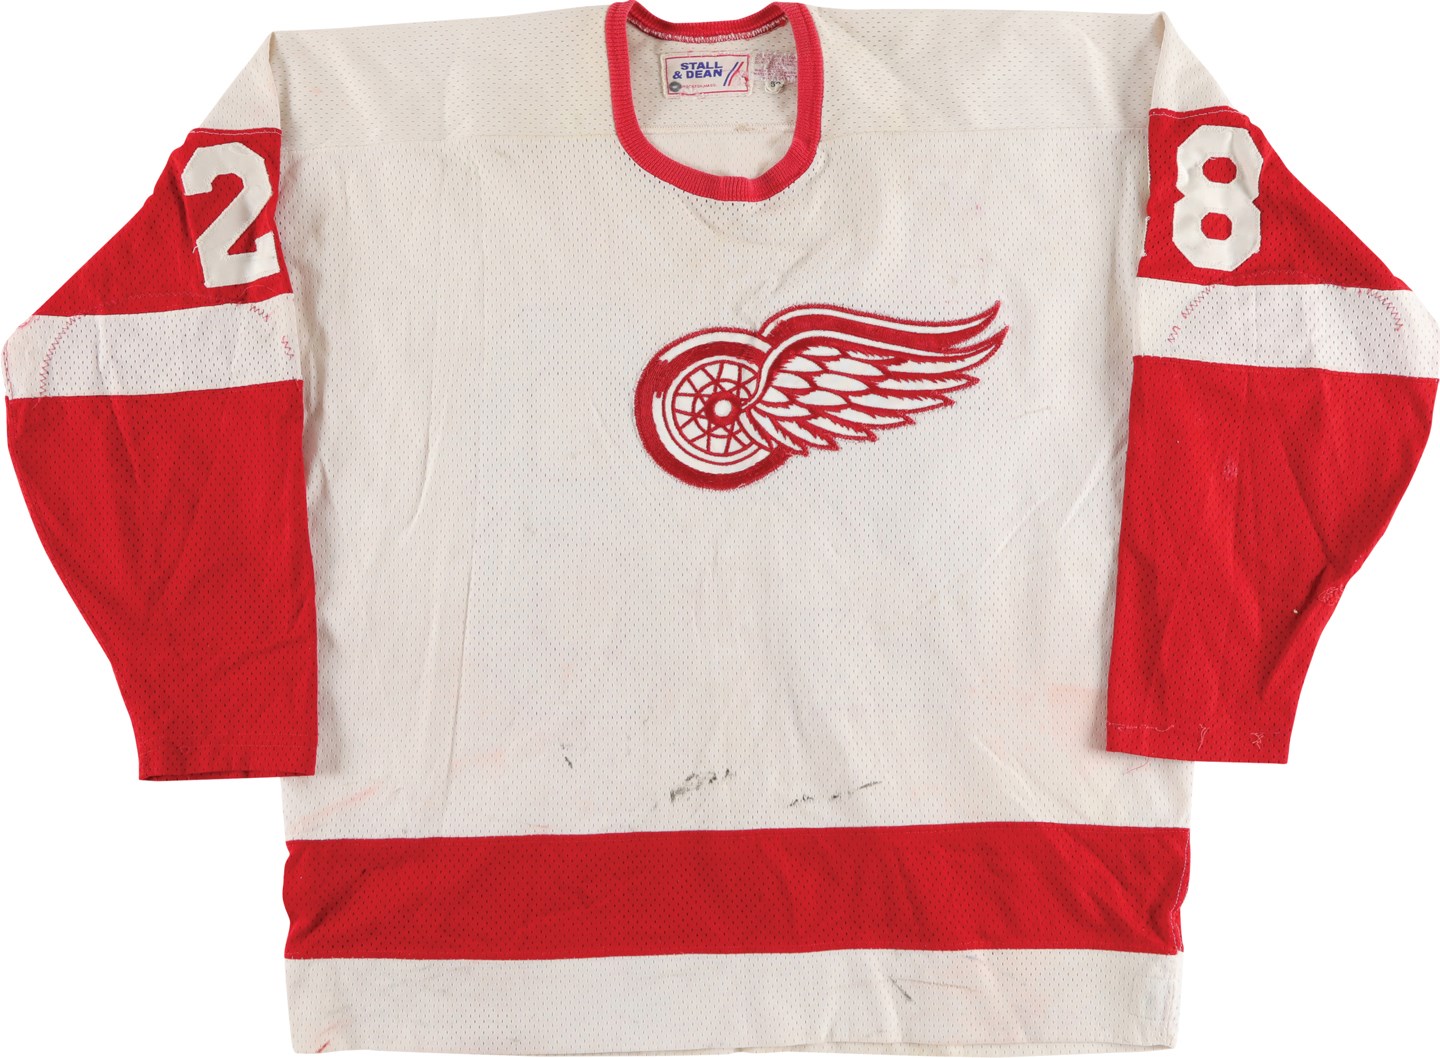 Hockey - 1979-80 Reed Larson Detroit Red Wings Game Worn Jersey